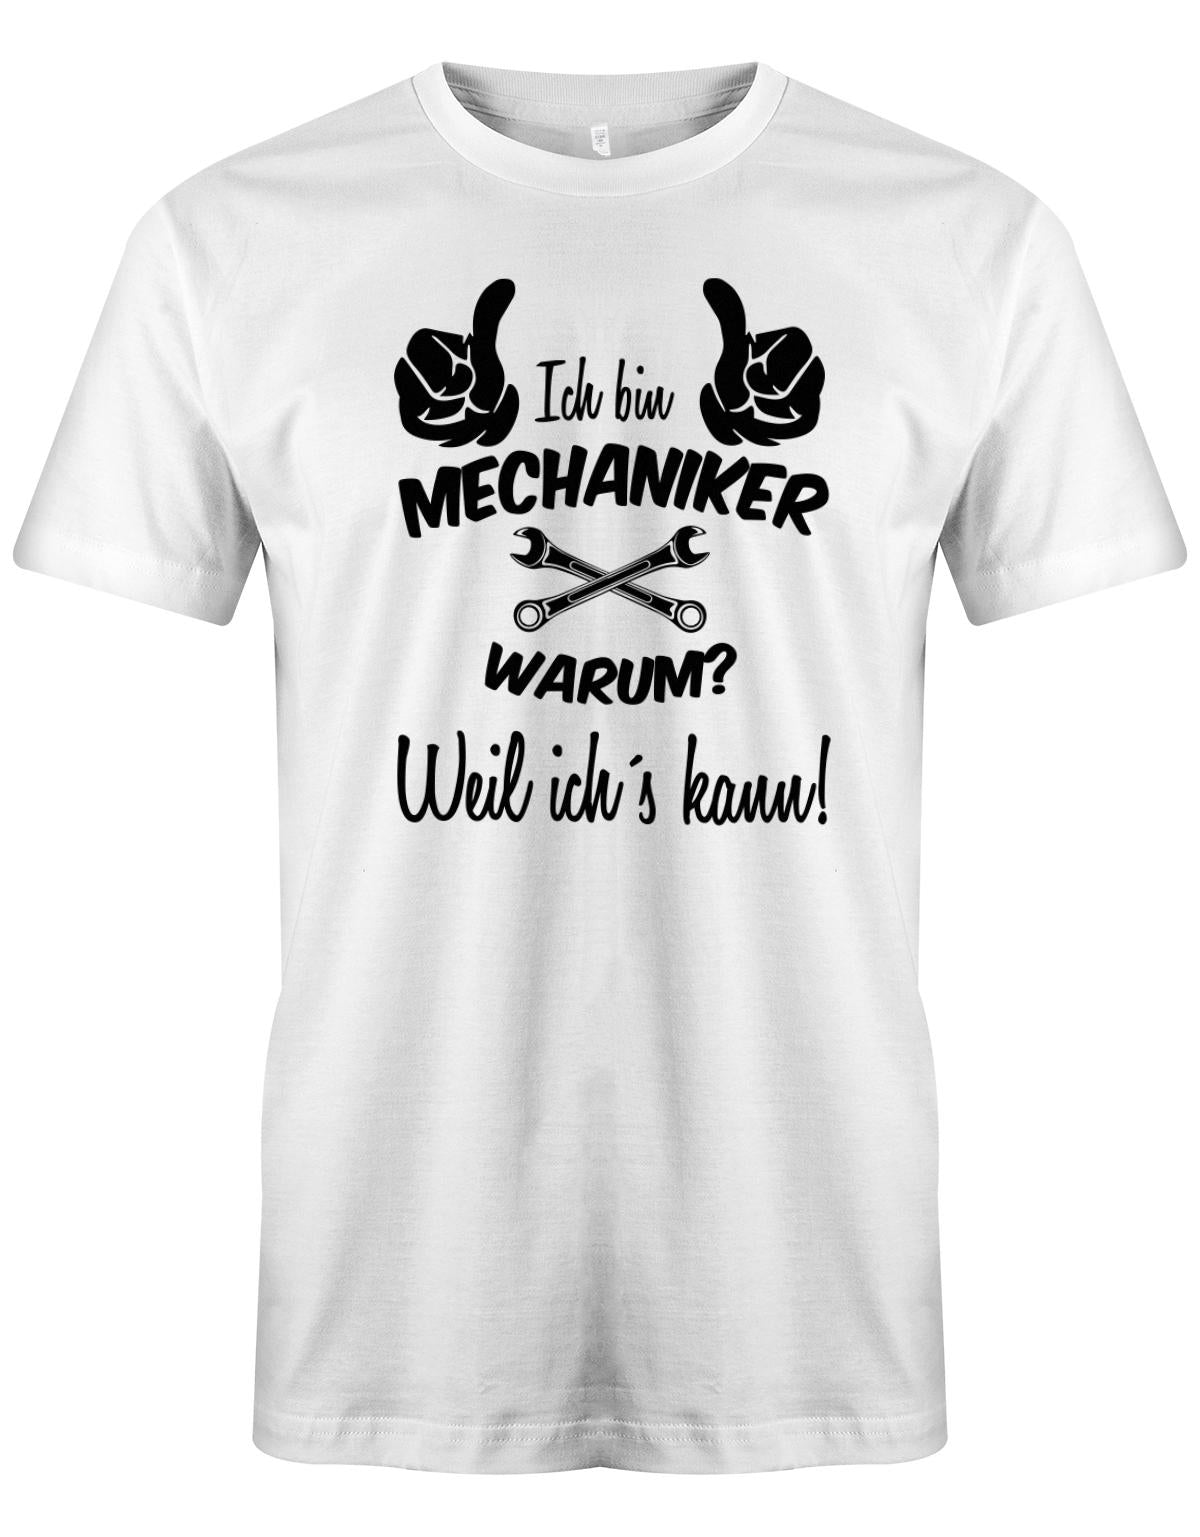 KFZ Mechaniker Shirt - Ich bin Mechaniker. Warum? Weil ich´s kann! Weiss